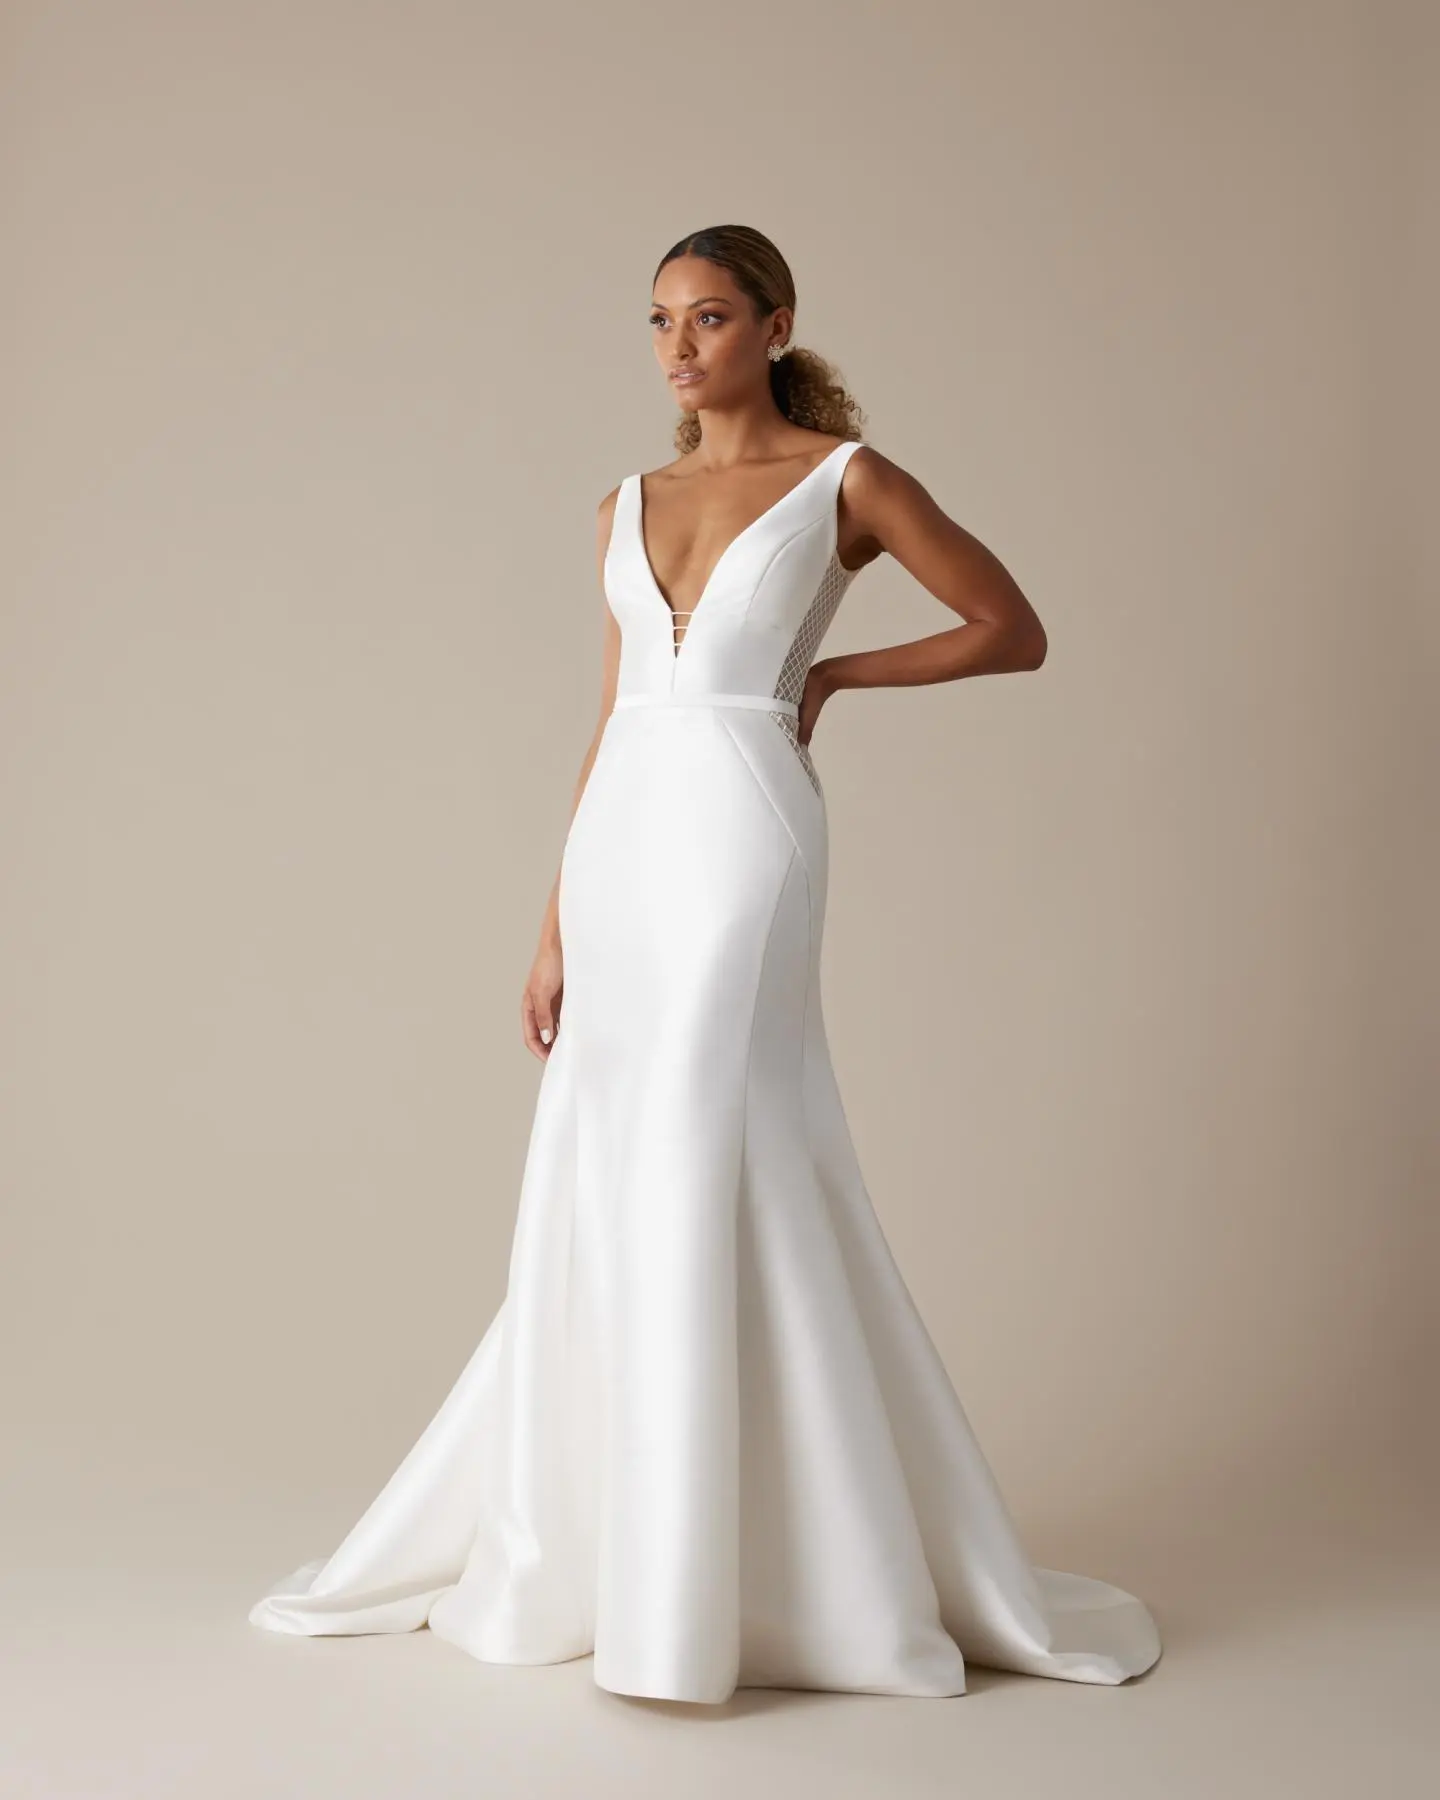 Plunge Neck Wedding Dresses ☀ Gowns ...